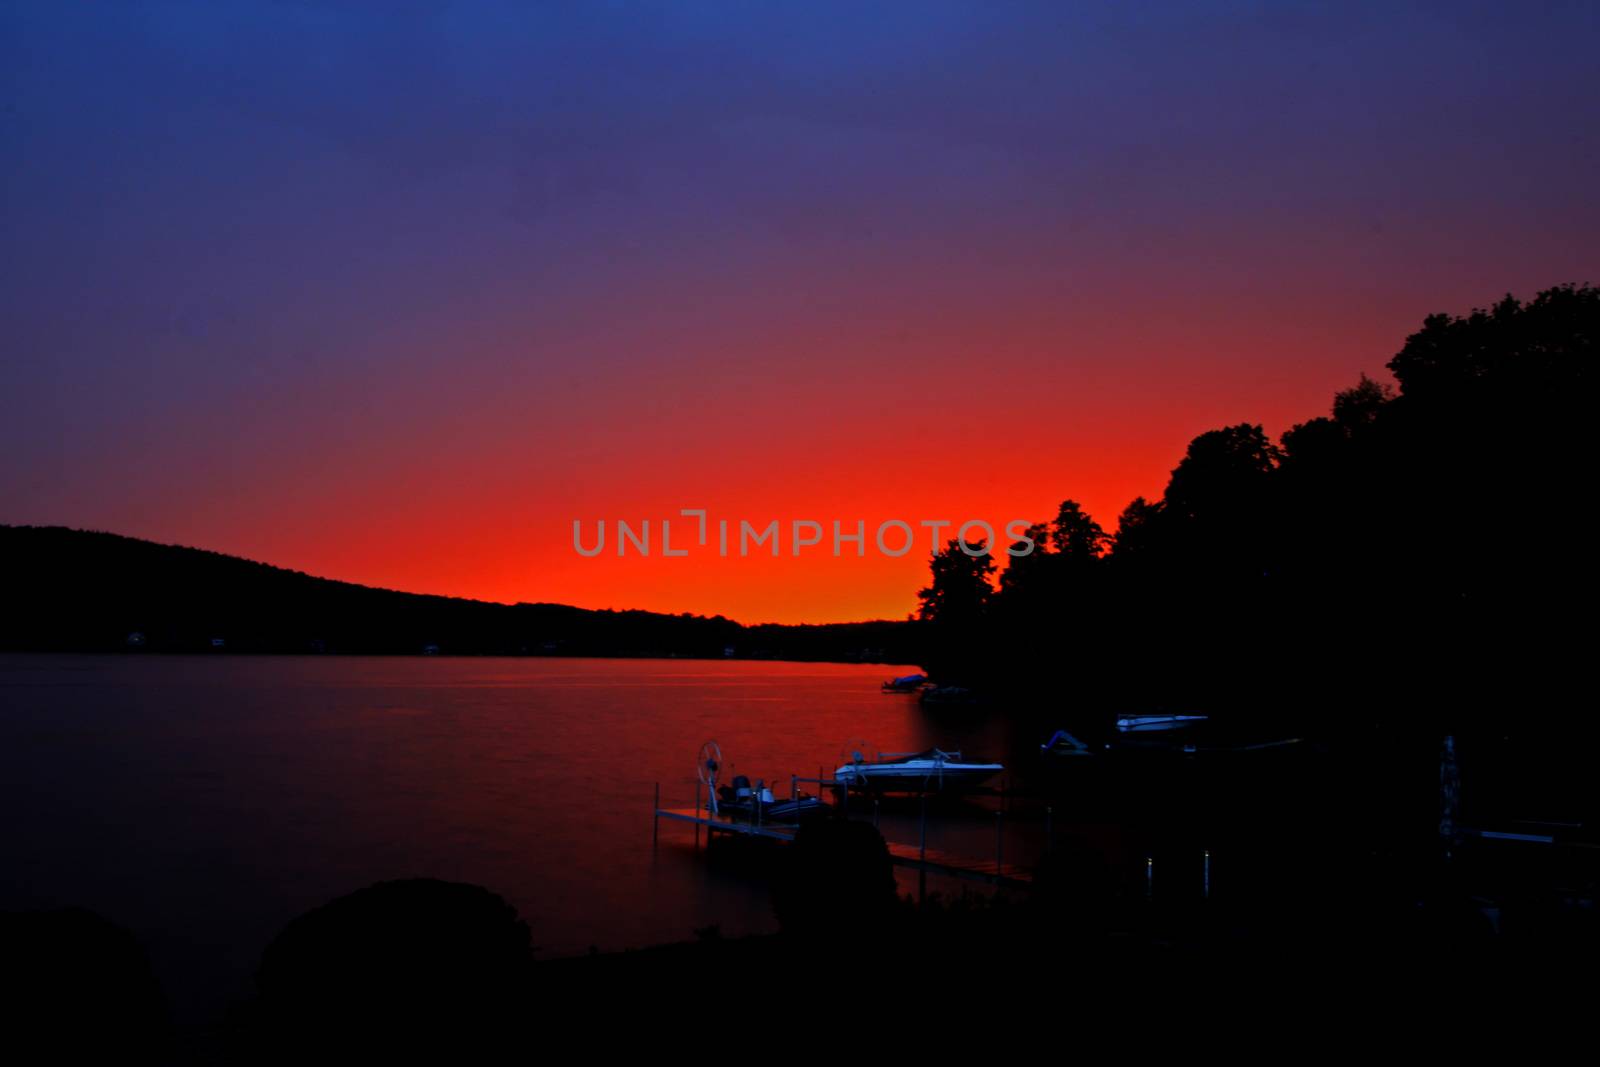 Fiery sunset on lake 24 by dbriyul